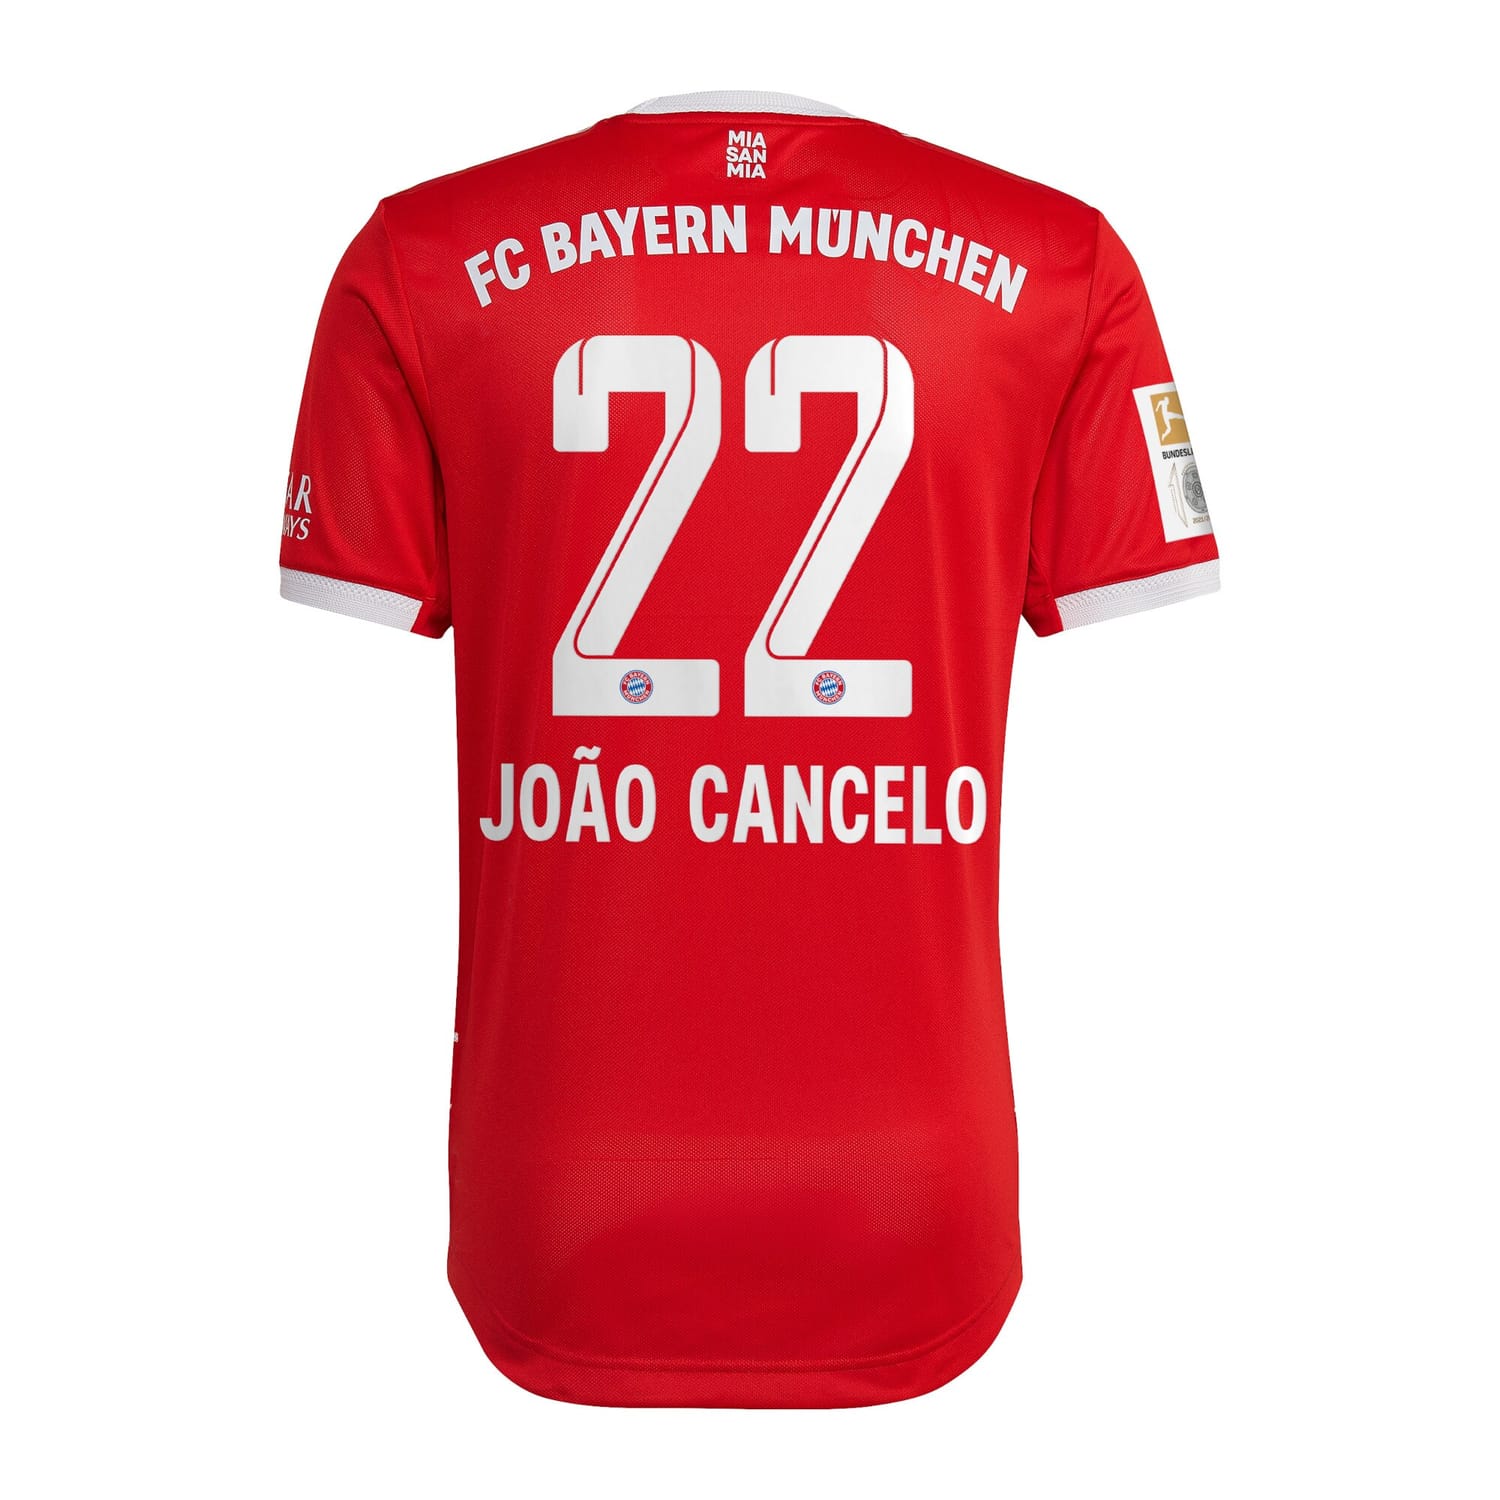 Bundesliga Bayern Munich Home Authentic Jersey Shirt 2022-23 player Joao Cancelo 22 printing for Men